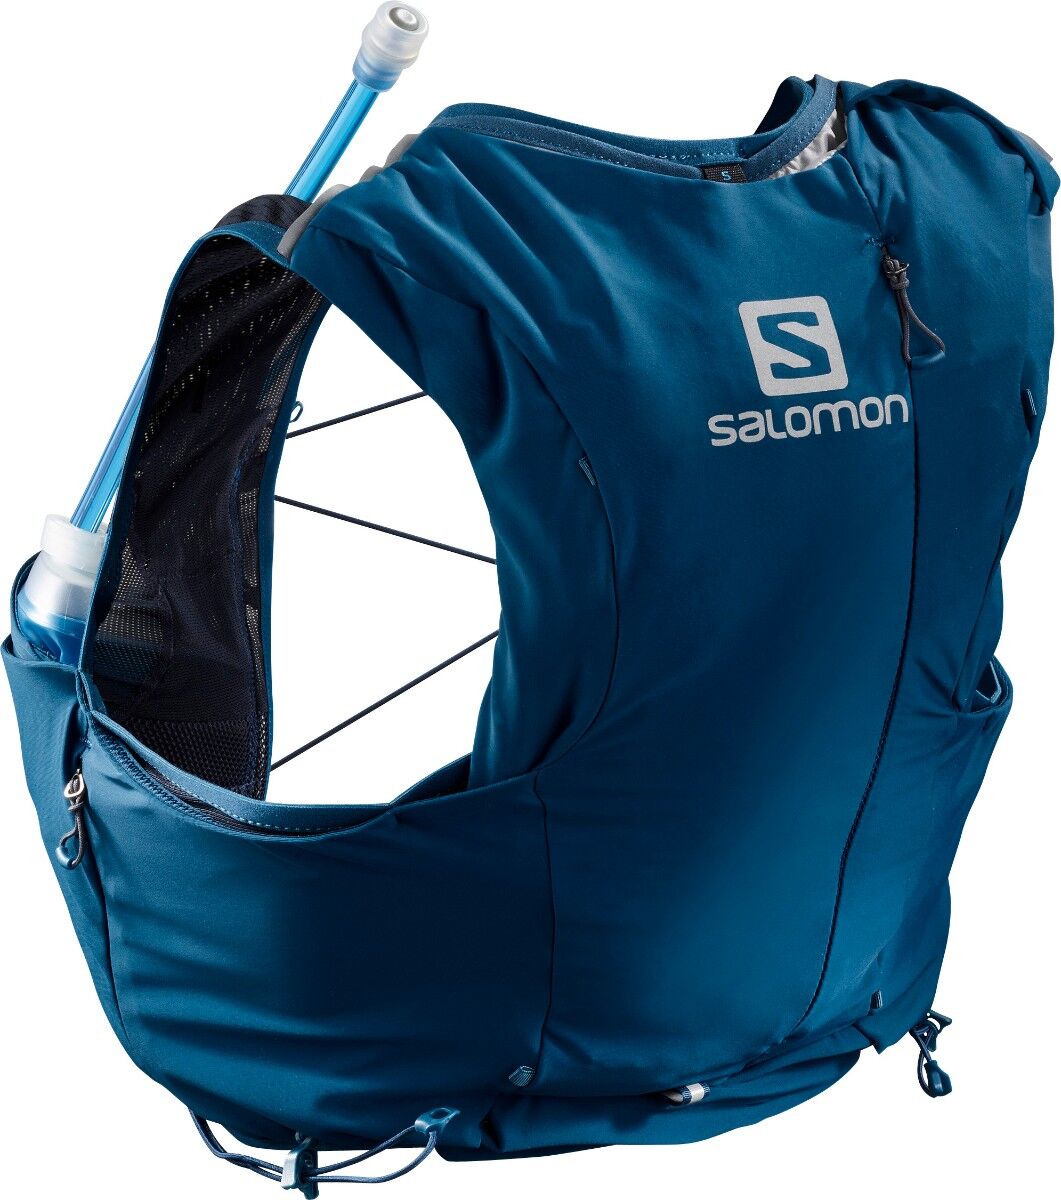 Salomon - Advanced Skin 8 Set W - Trail running backpack - Women's